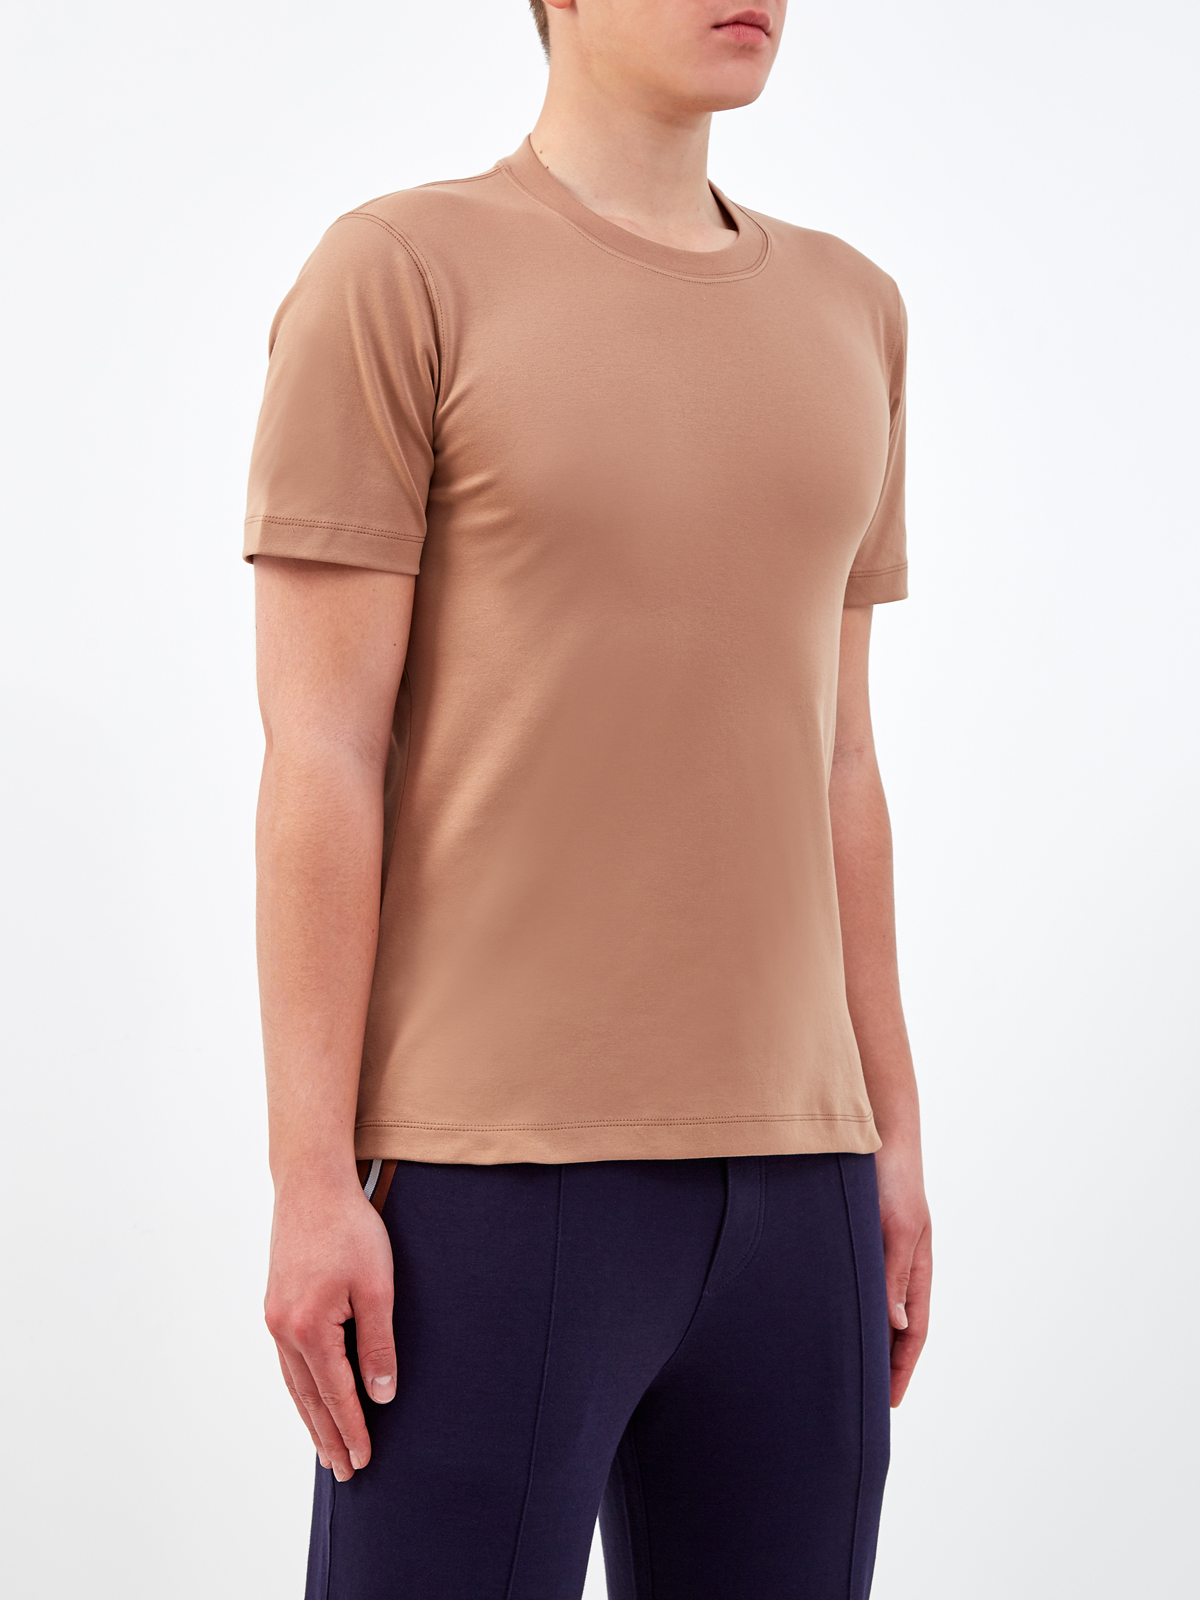 Однотонная футболка Slim Fit из мягкого джерси BRUNELLO CUCINELLI, цвет бежевый, размер 52;54;48 - фото 3